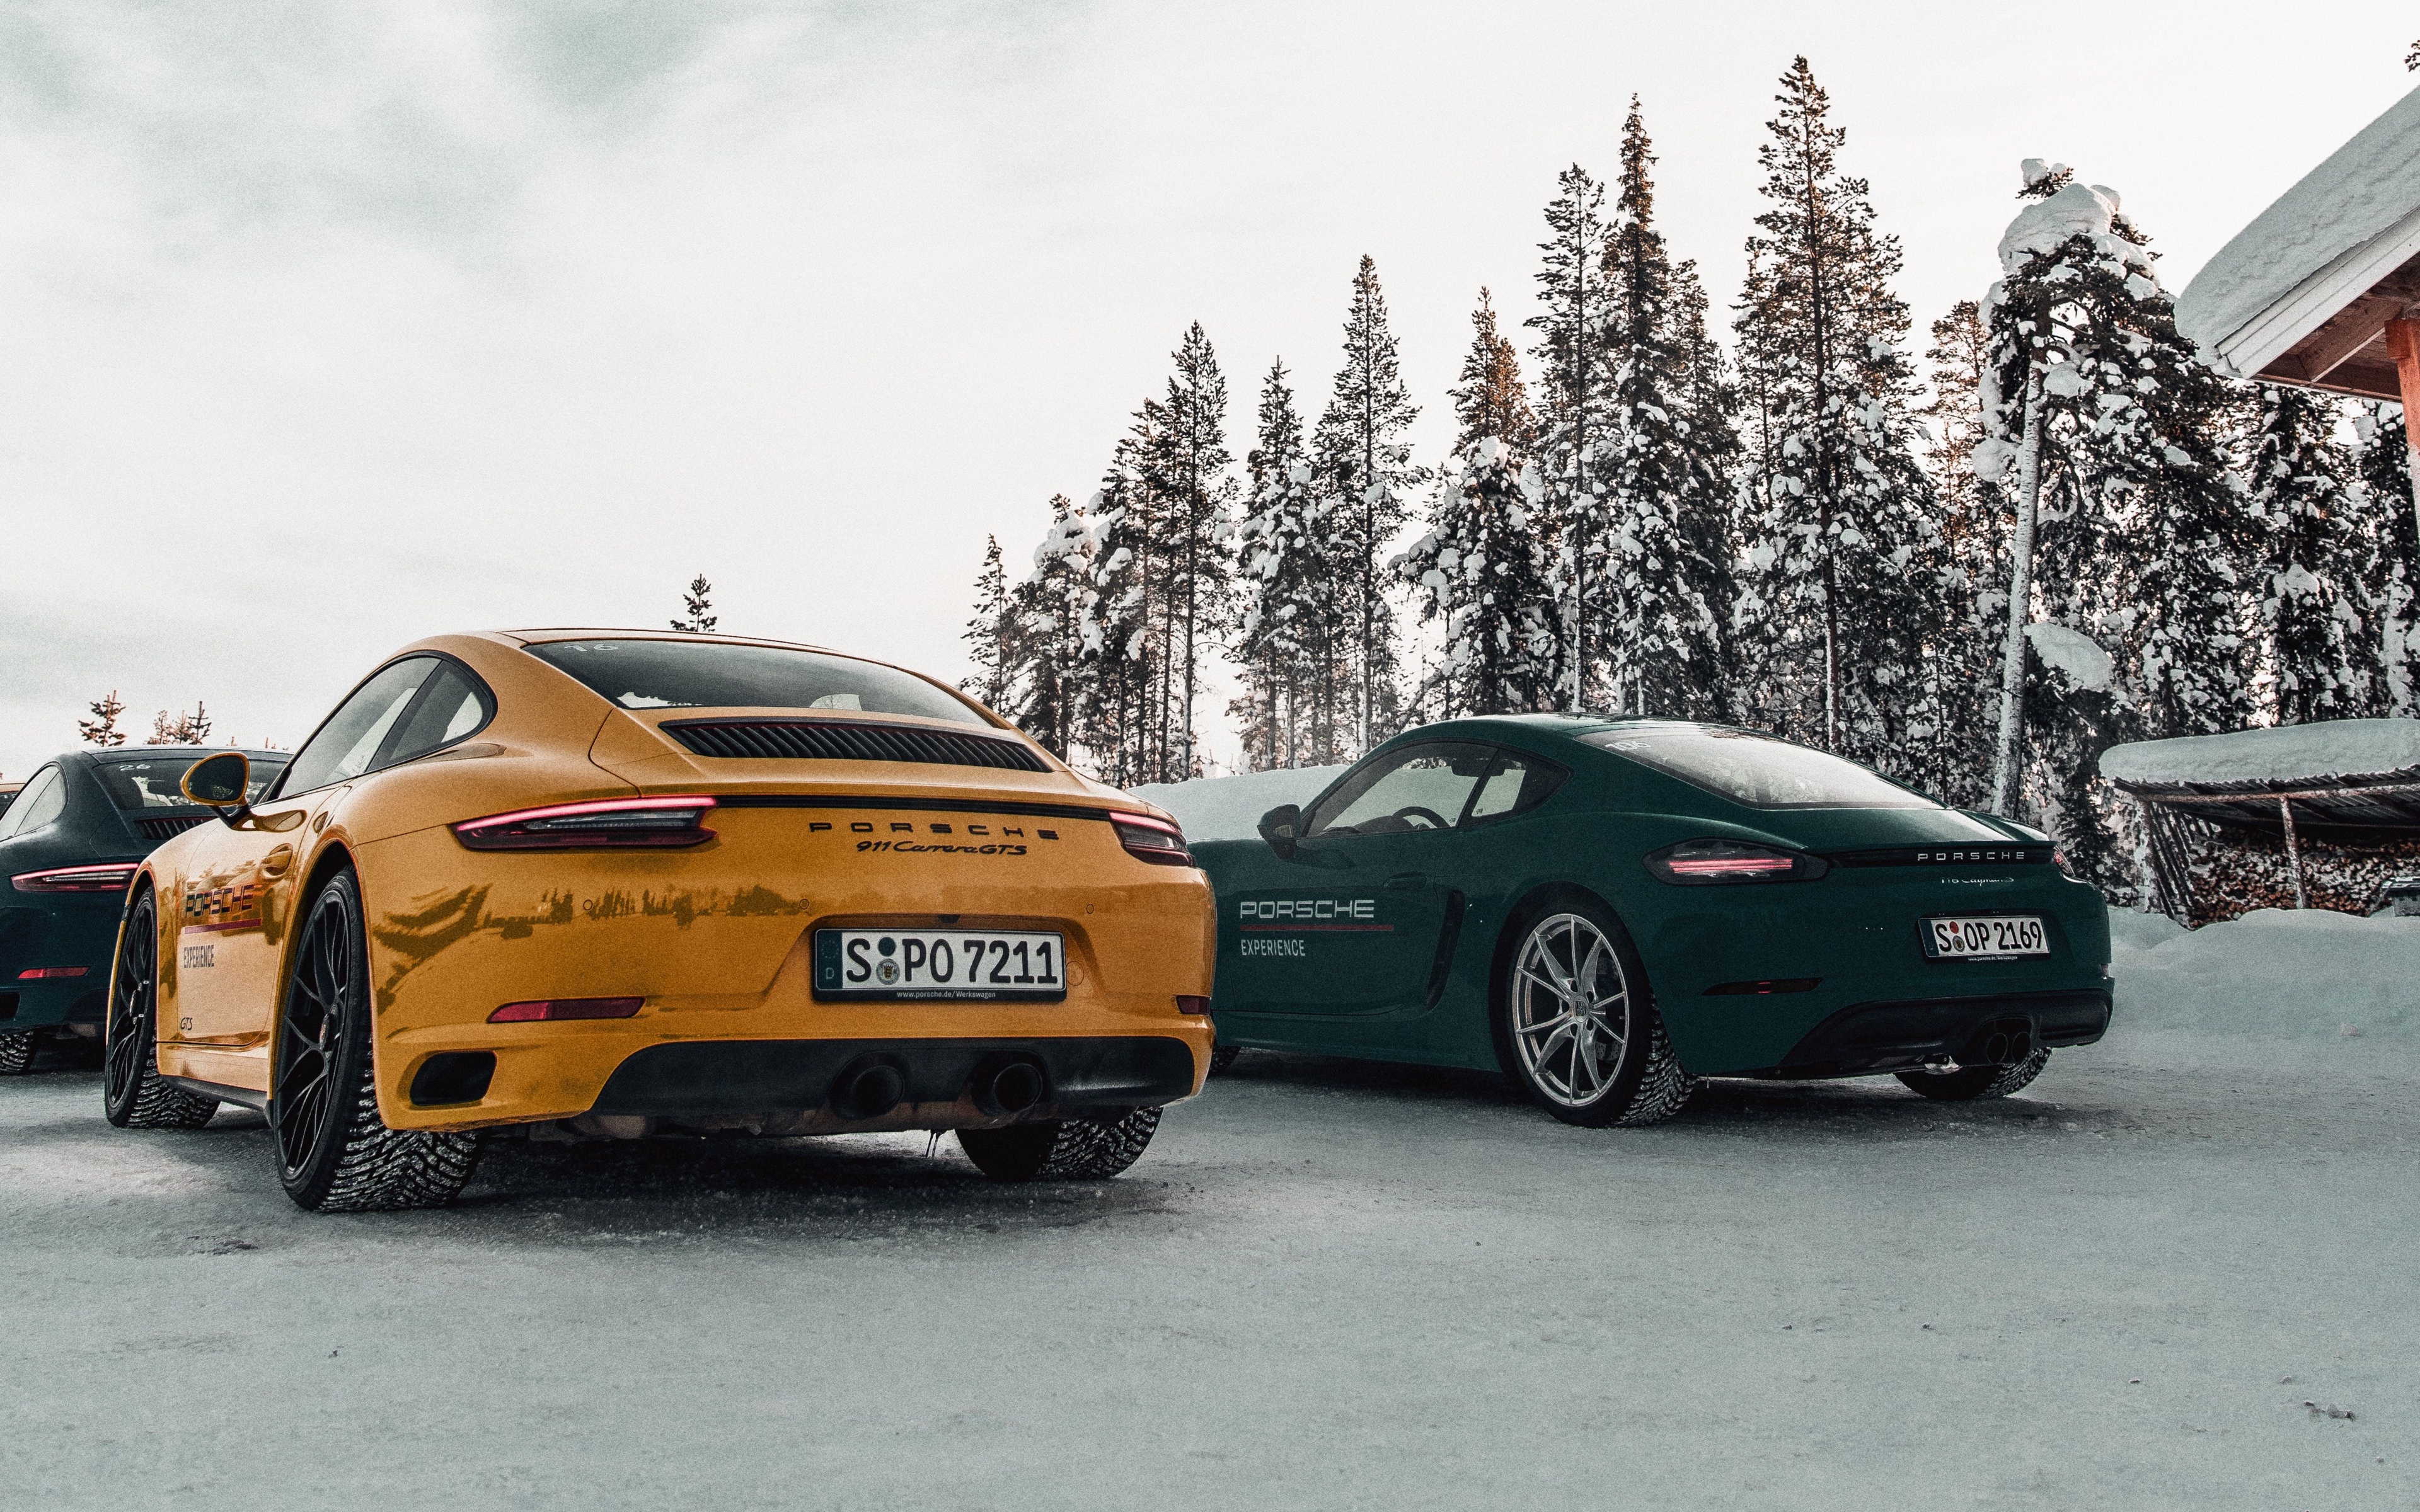 Wallpaper Porsche, Cars, Sports Car, Snow, Racing - Car In Snow Wallpaper Iphone - HD Wallpaper 